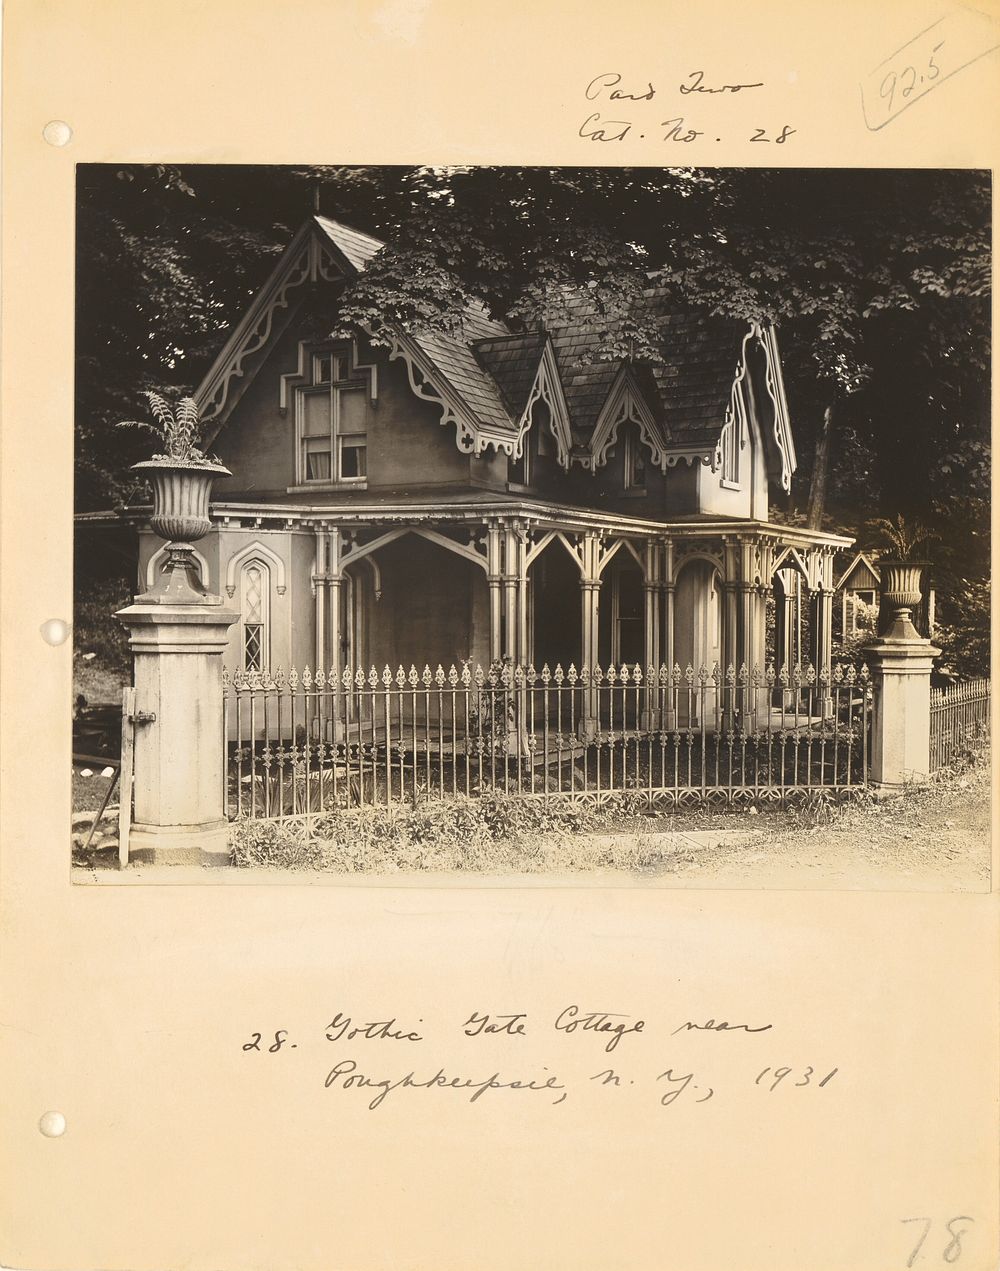 Gothic Cottage near Poughkeepsie, New York by Walker Evans